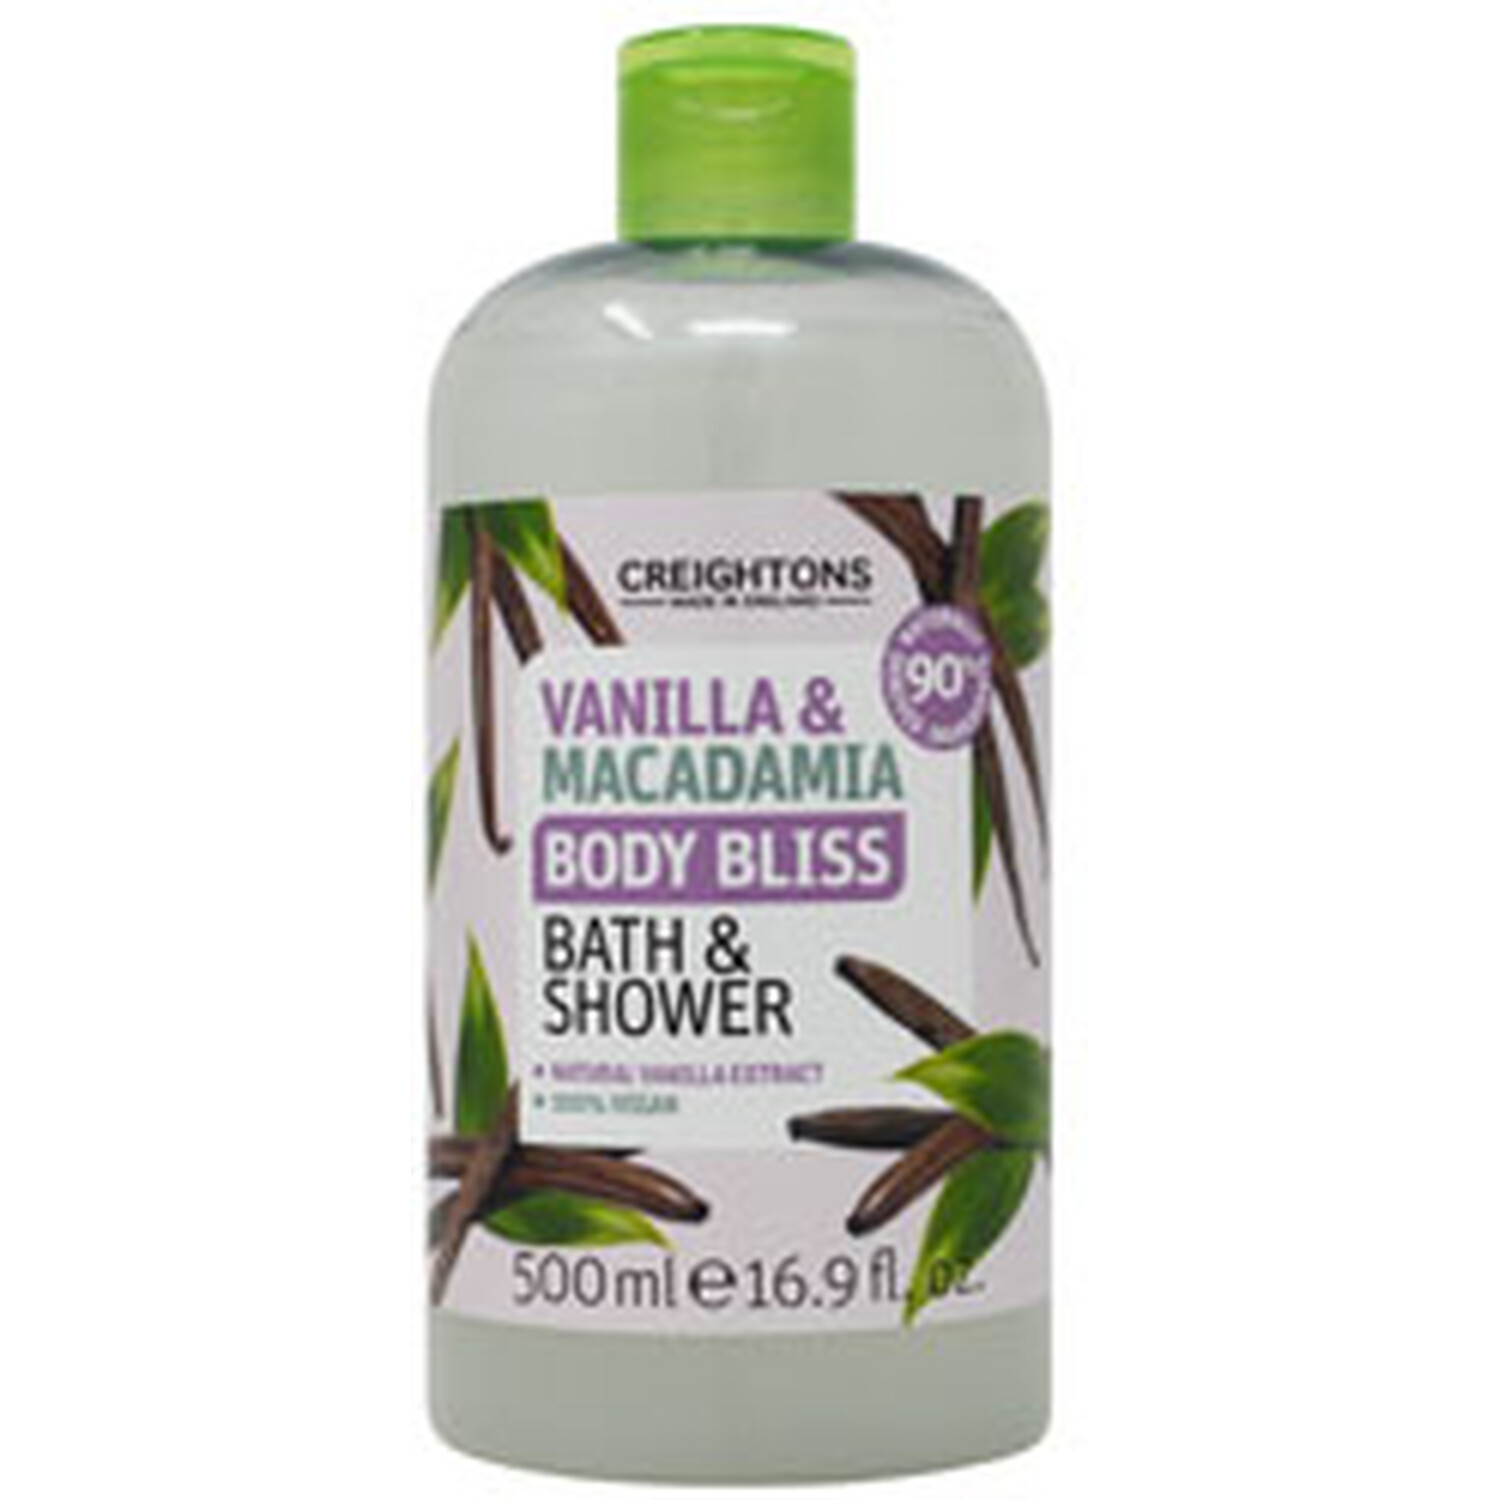 Vanilla and Macadamia Body Bliss Bath and Shower 500ml Image